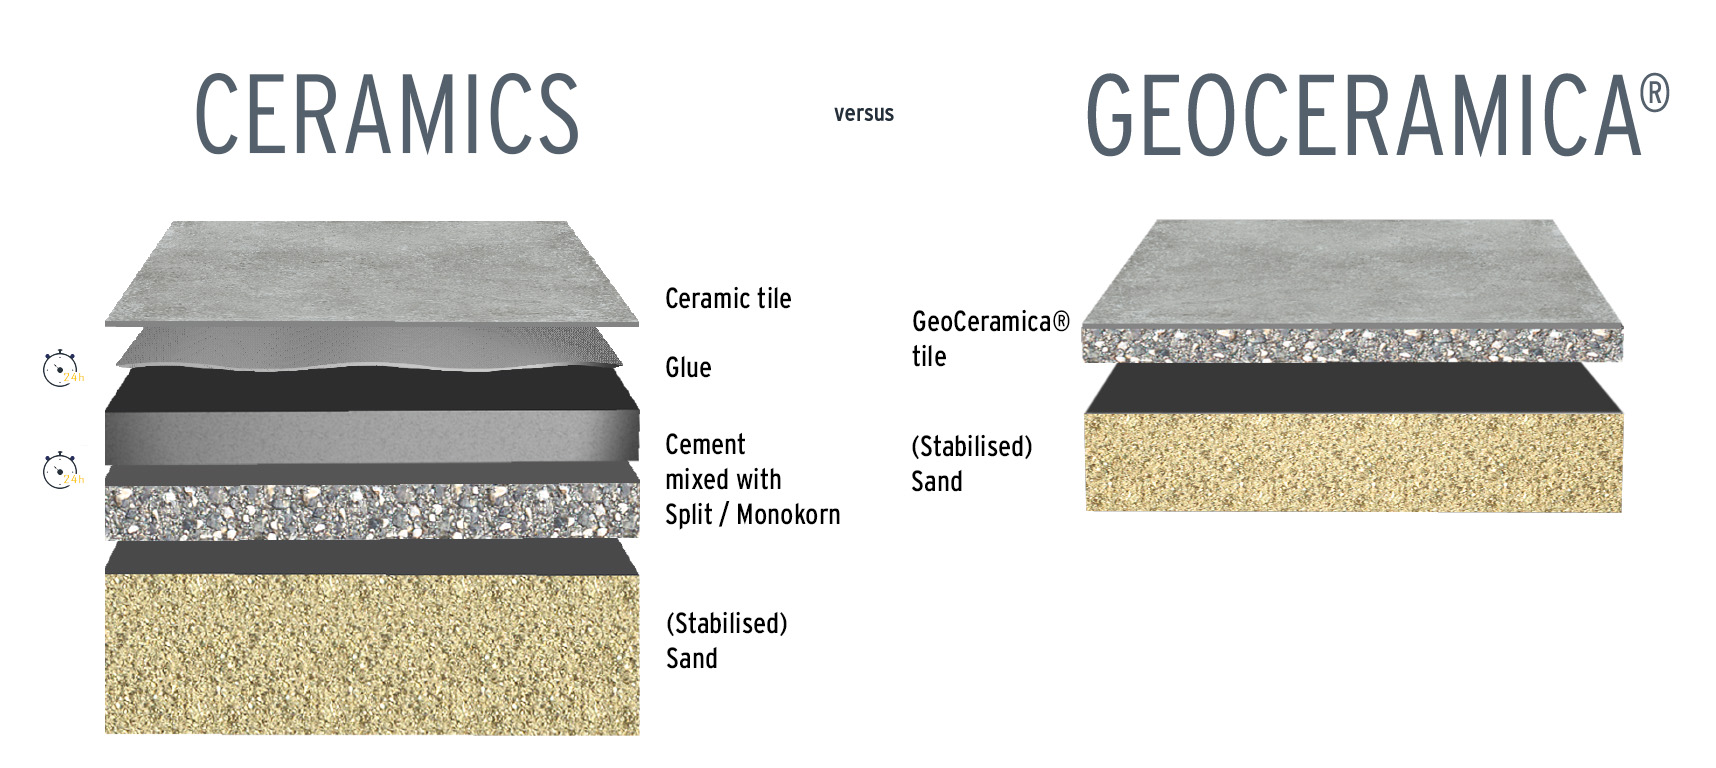 GeoCeramica vs Ceramics